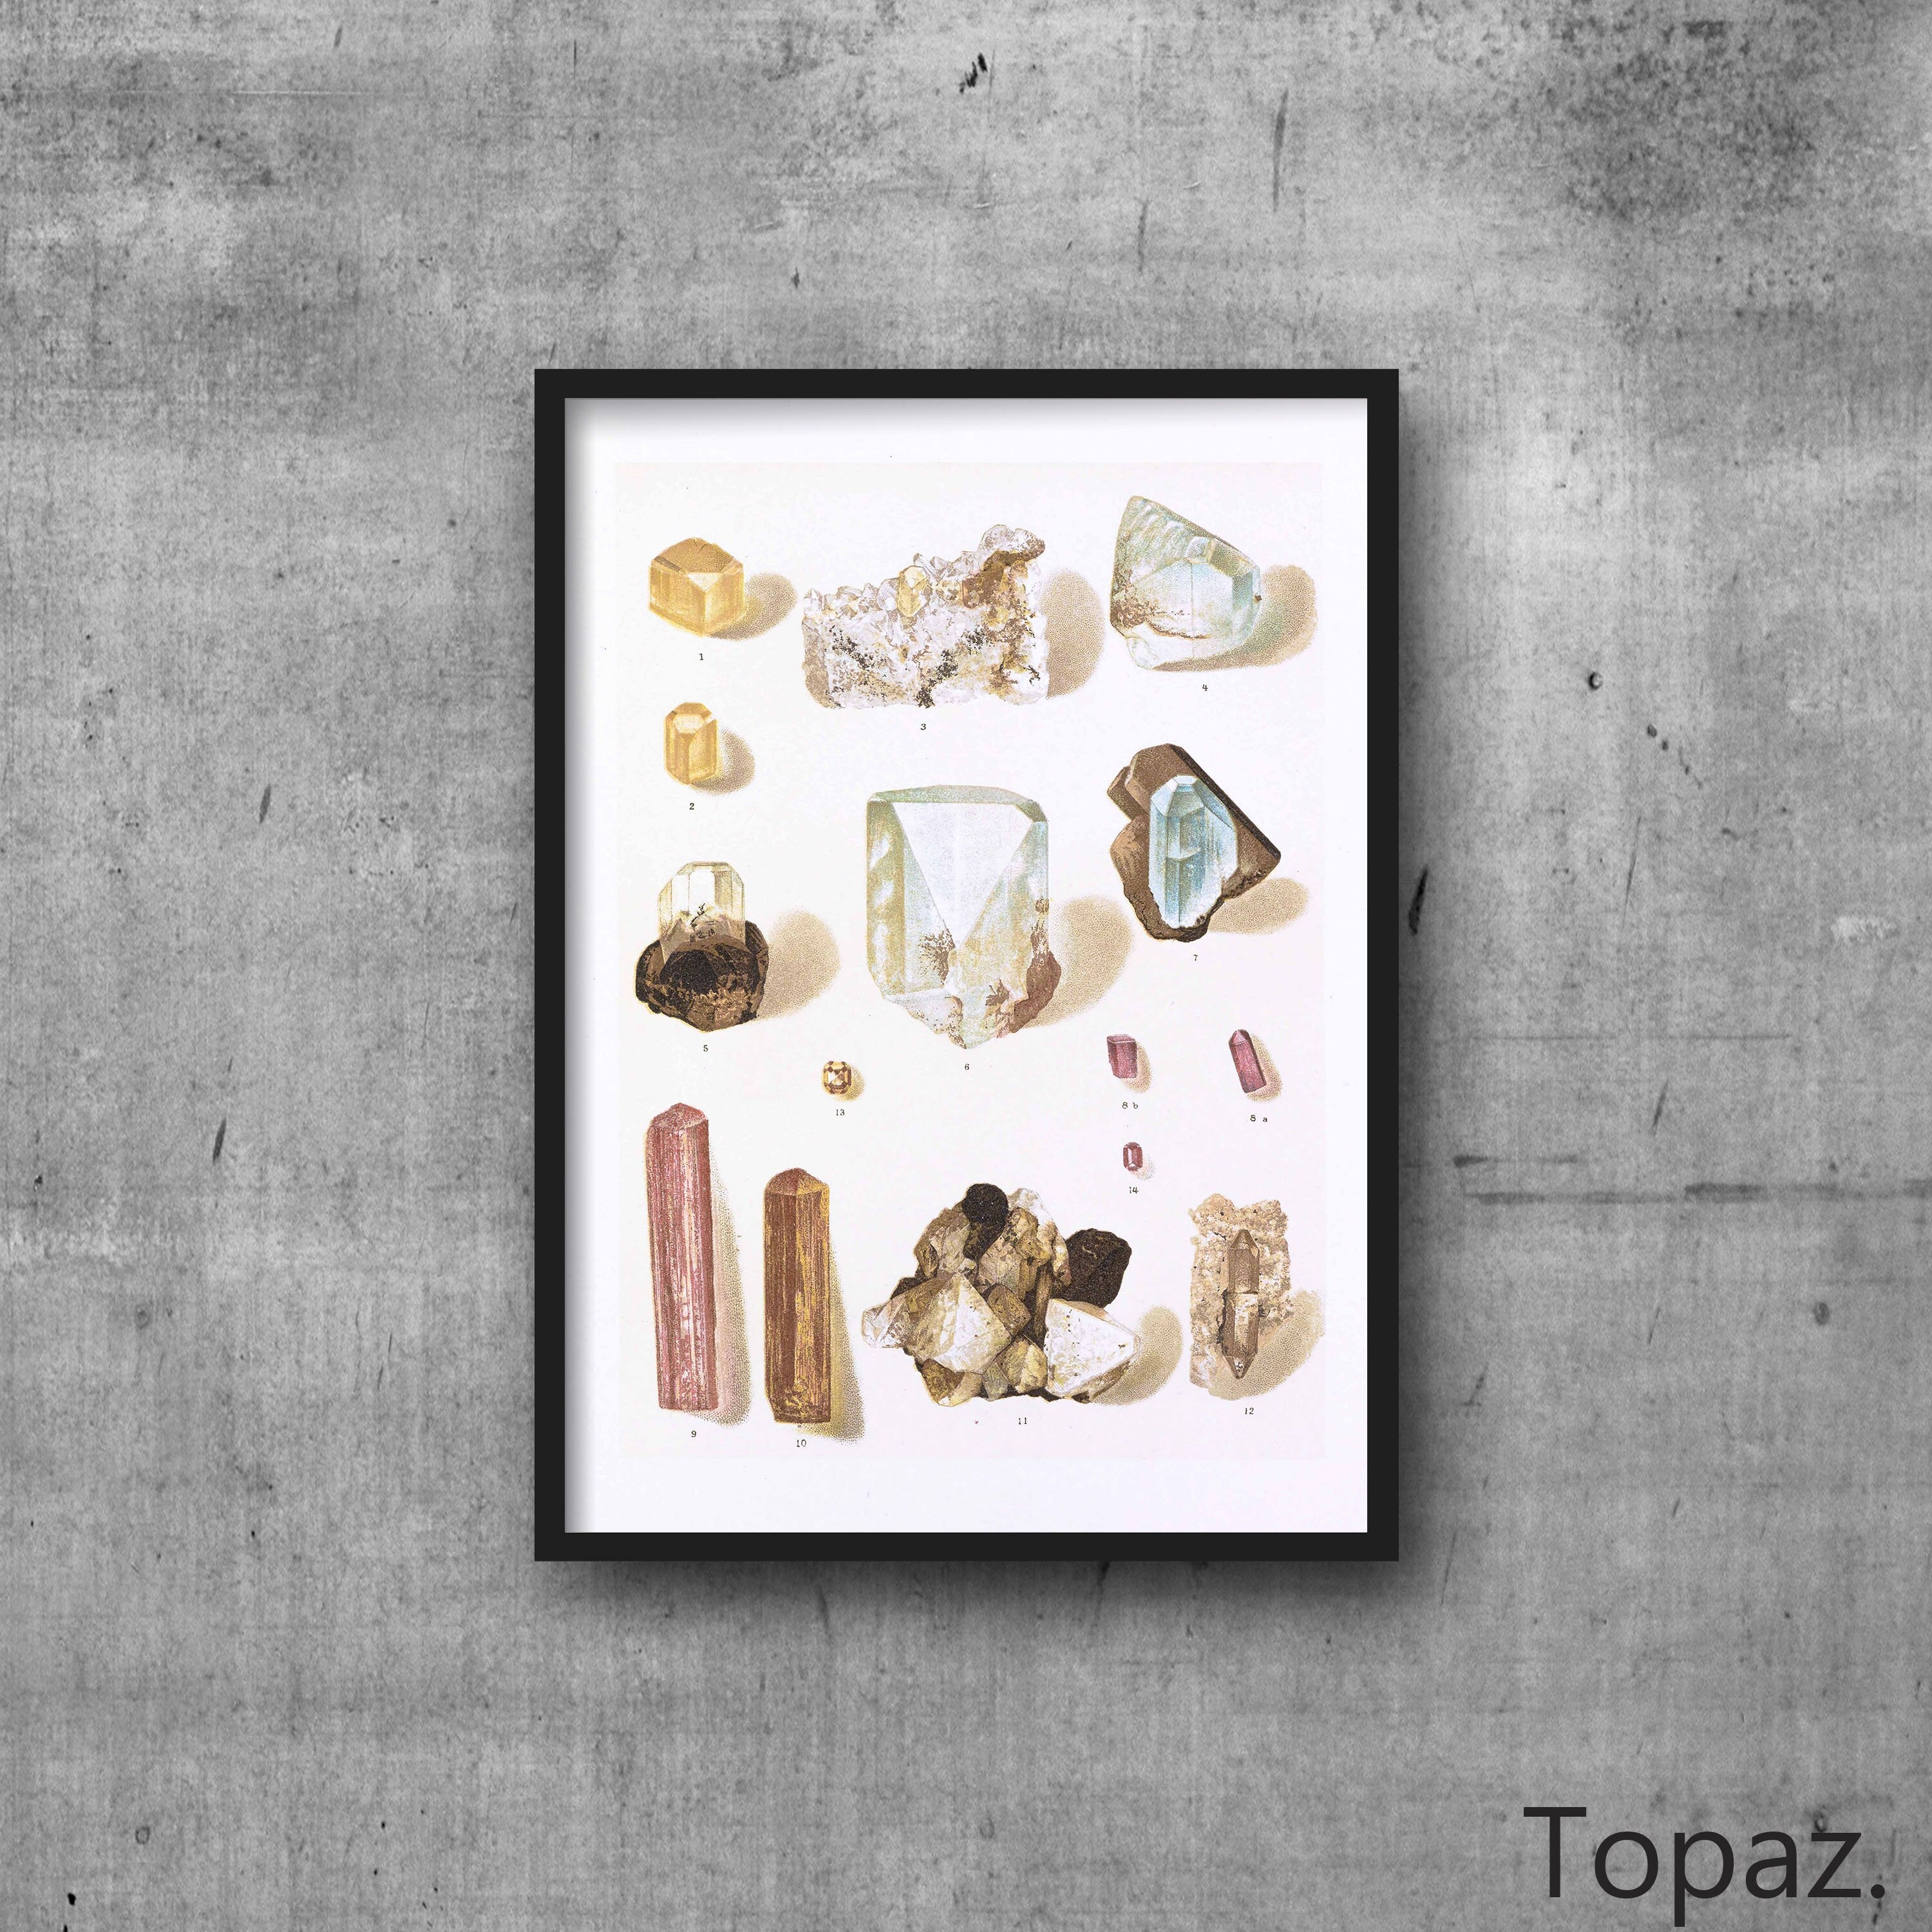 Topaz Crystal Mineral High Resolution Digital Image 300 DPI Vintage Antique watercolour Illustration Print Poster, Wall Art